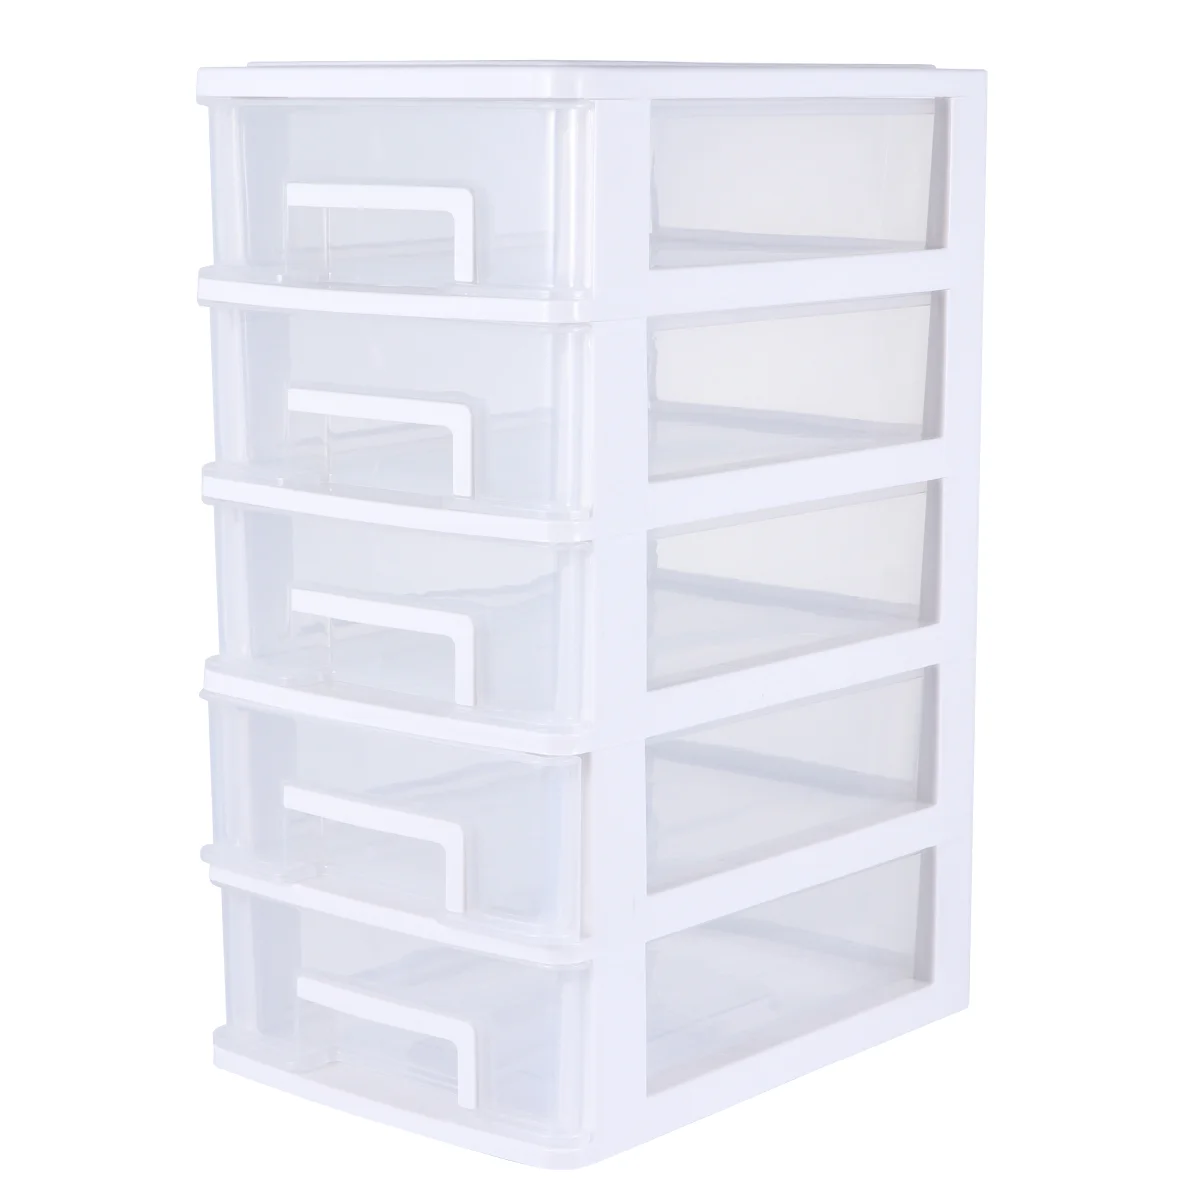 

Storage Drawer Drawers Organizer Plastic Box Cabinet Desktop Type Closet Bins Sundries Holder Desk Stacking Shelves Layer